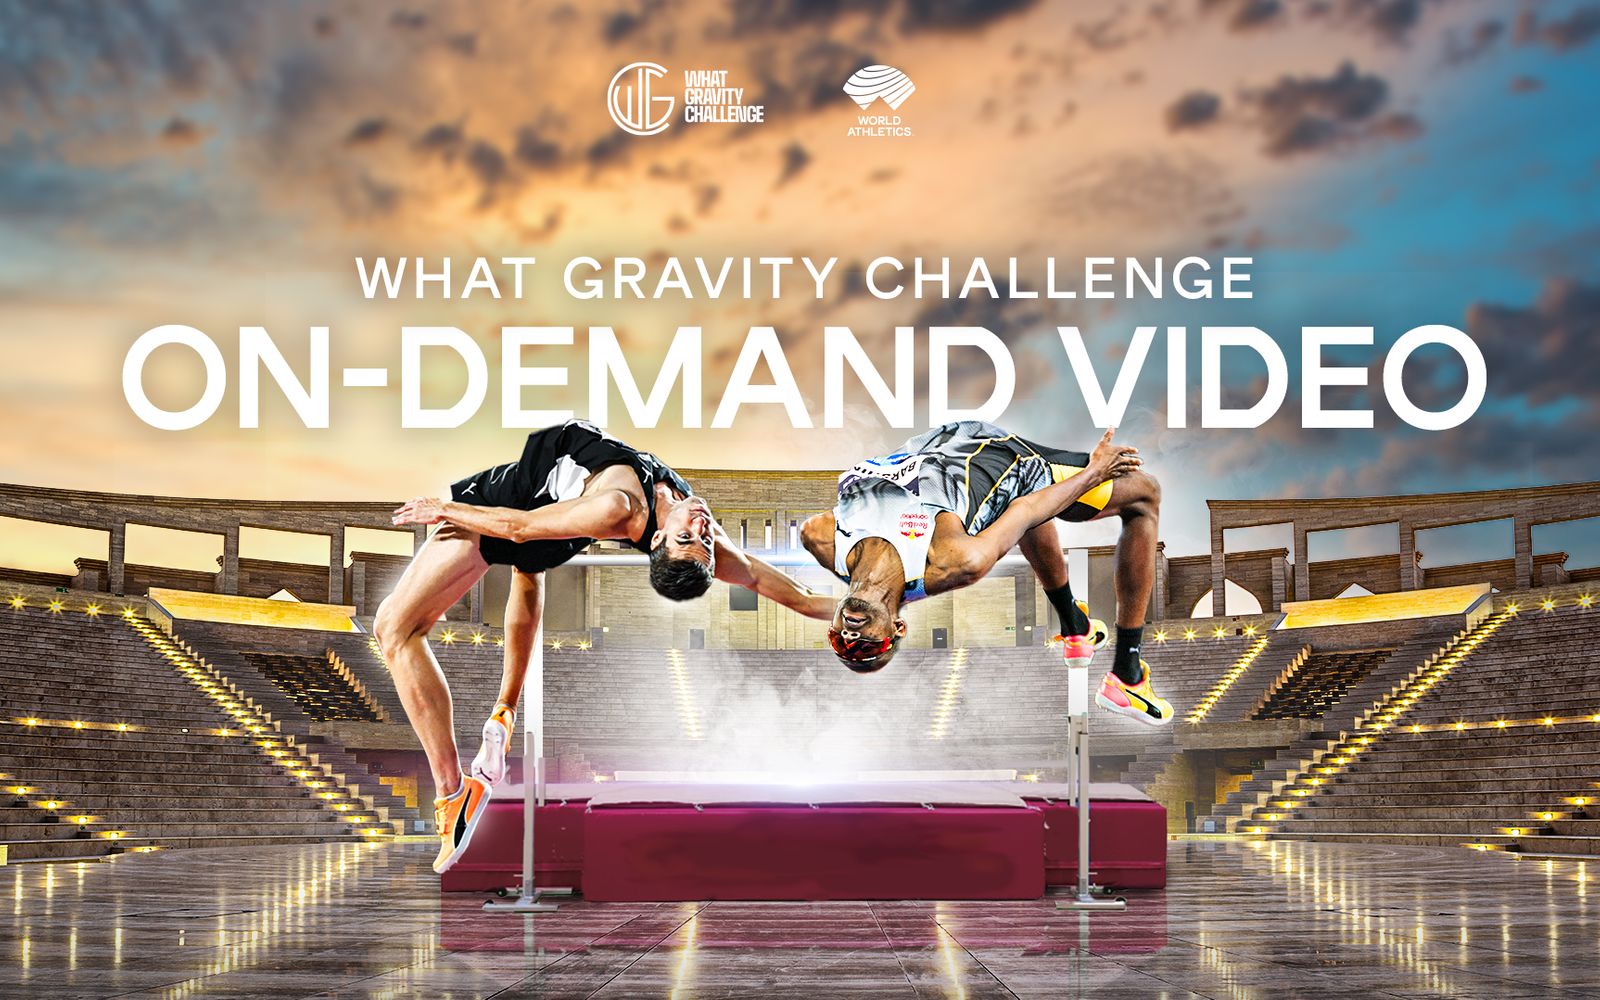 What Gravity Challenge on demand video